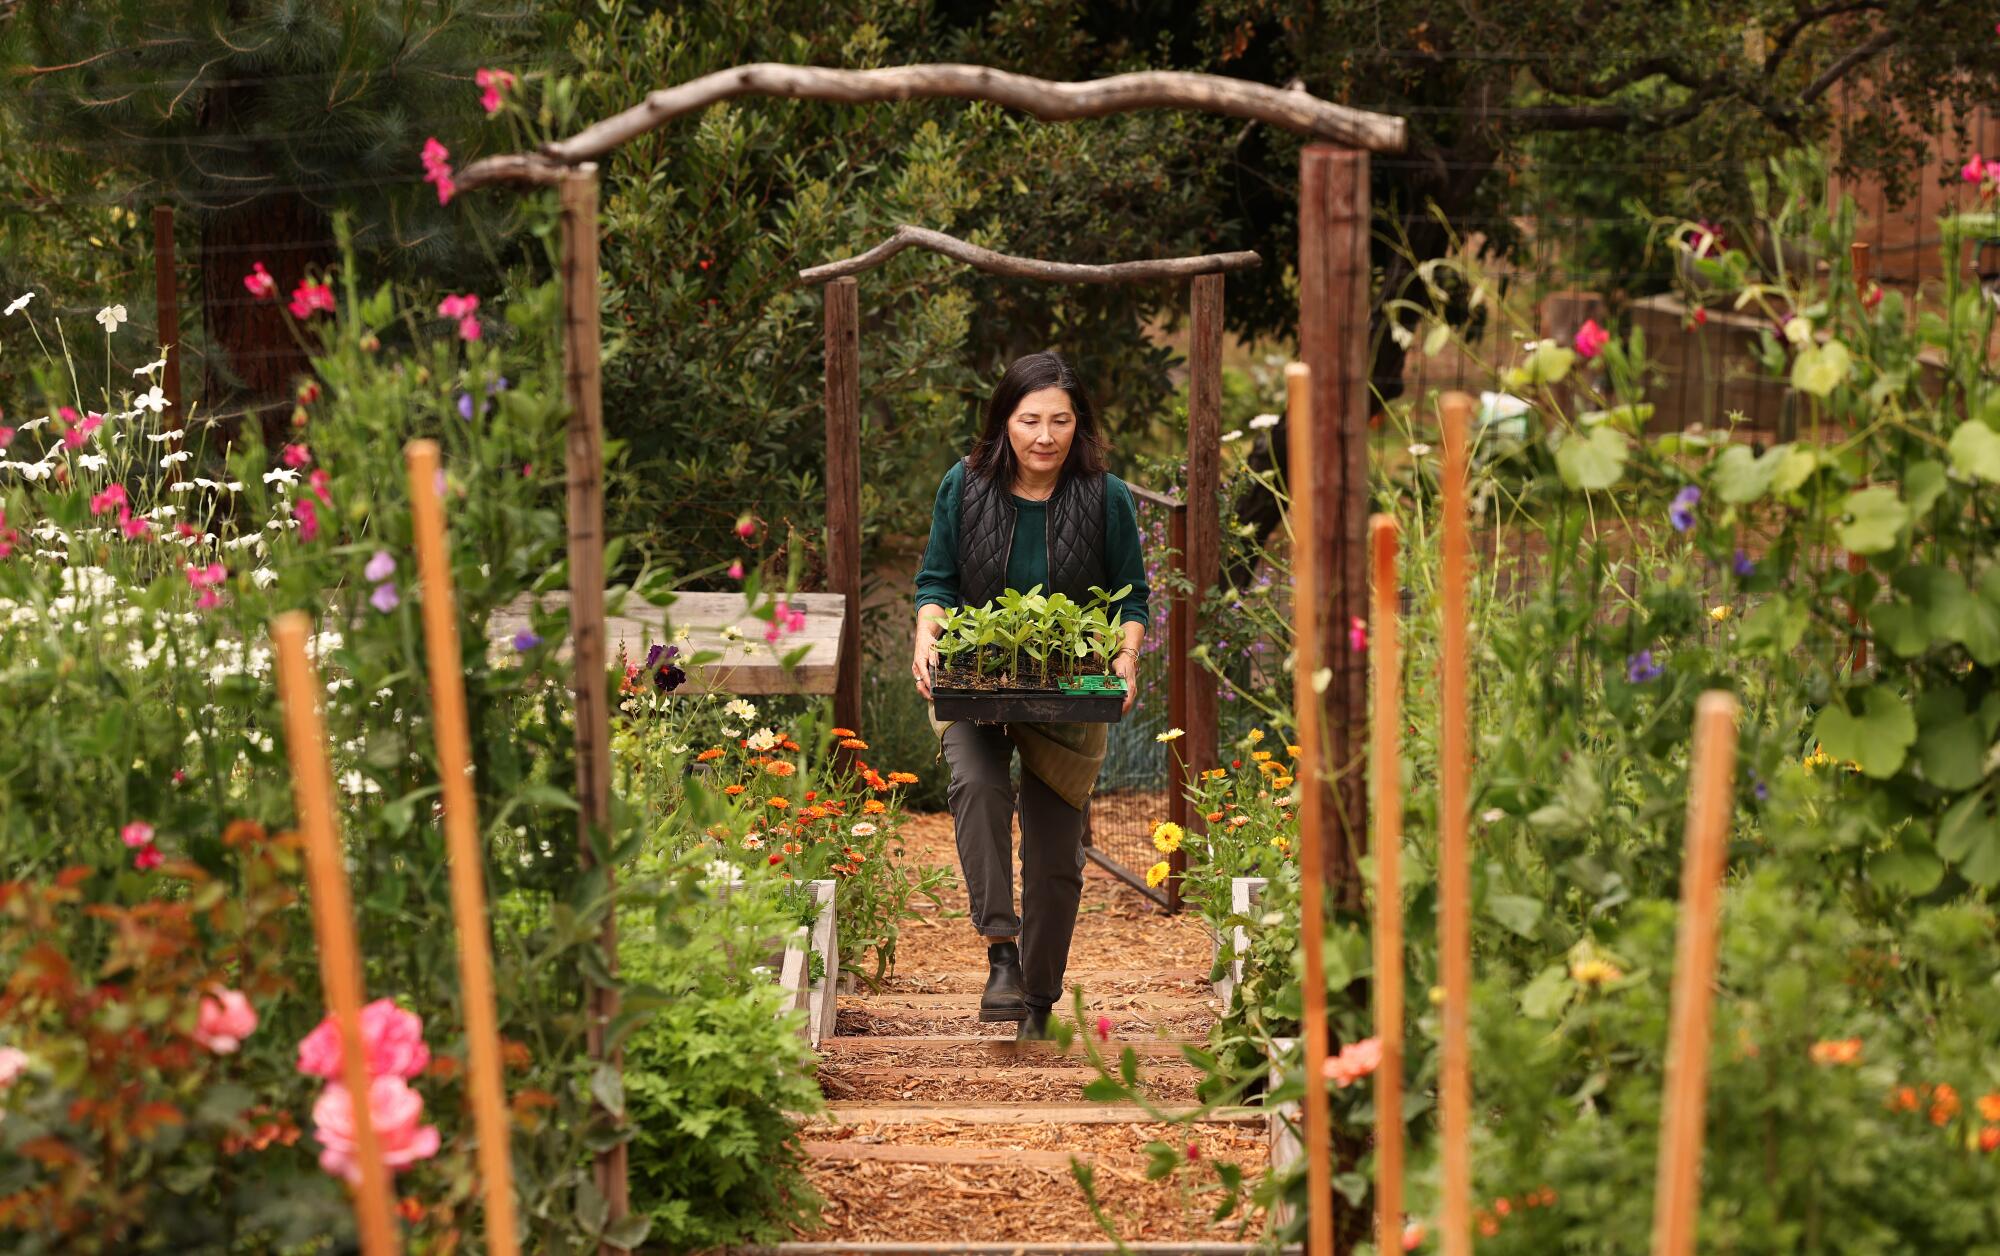 Ferguson carries zinnias she grew from seed up the steps of her hillside garden.